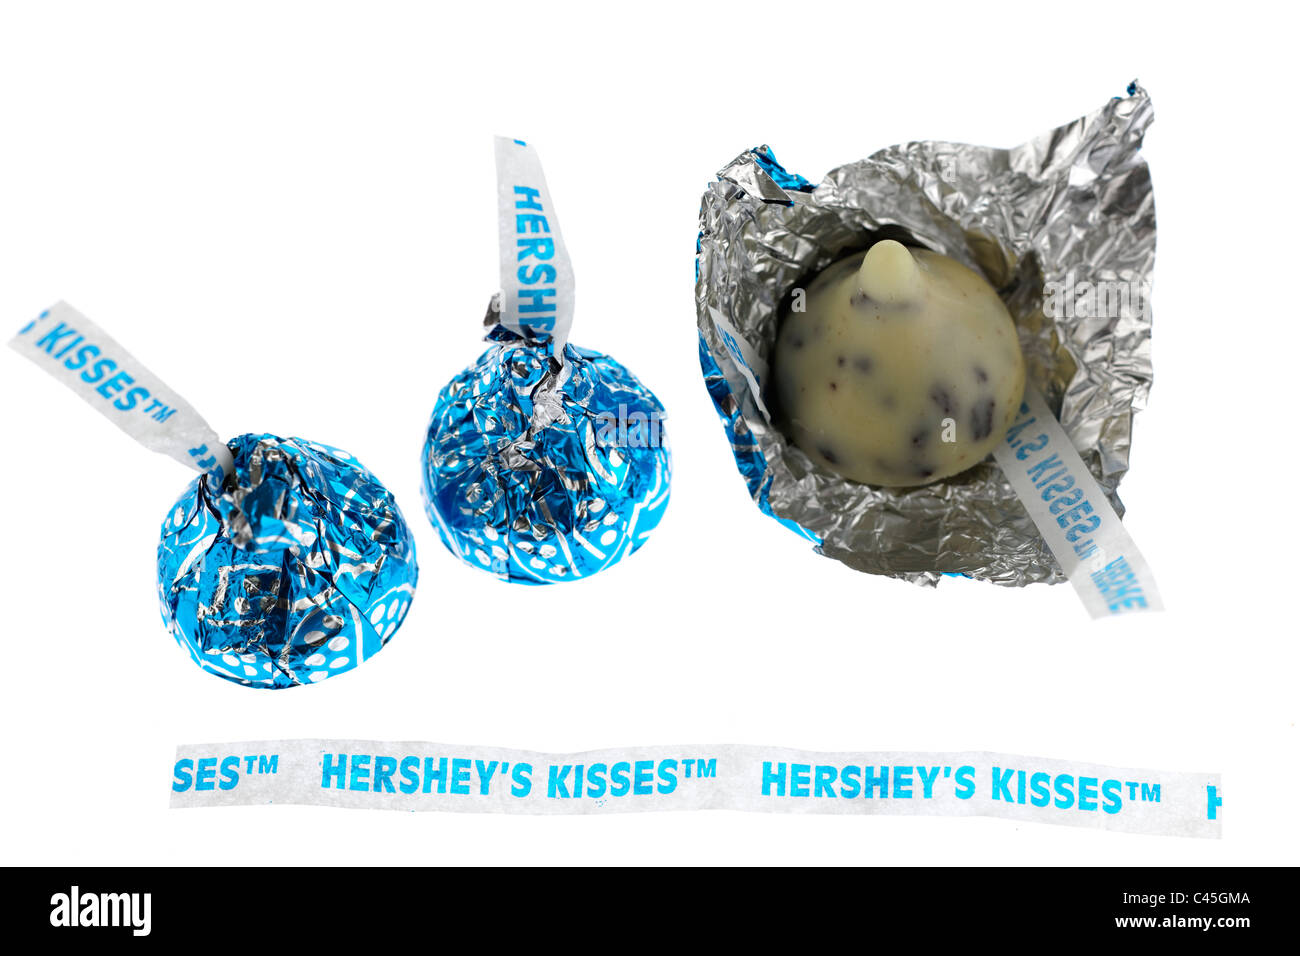 Three Hersheys kisses chocolates Stock Photo